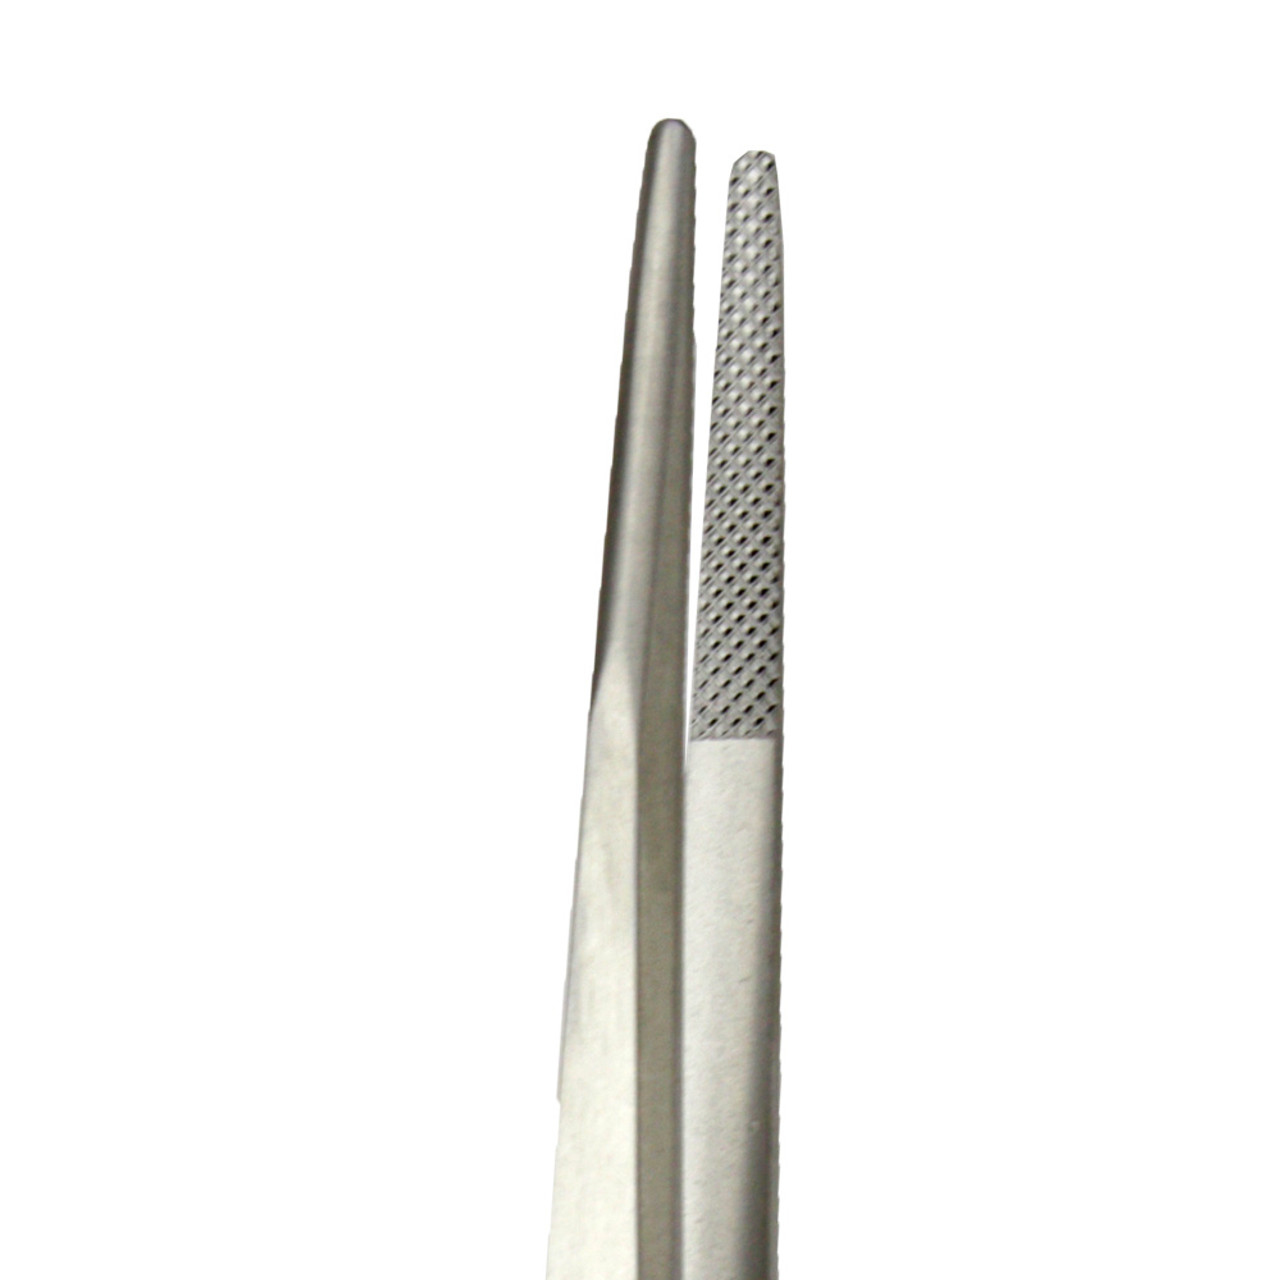 Bergeon 7027-LR1 Stainless Steel Diamond Locking Tweezers Large Tips